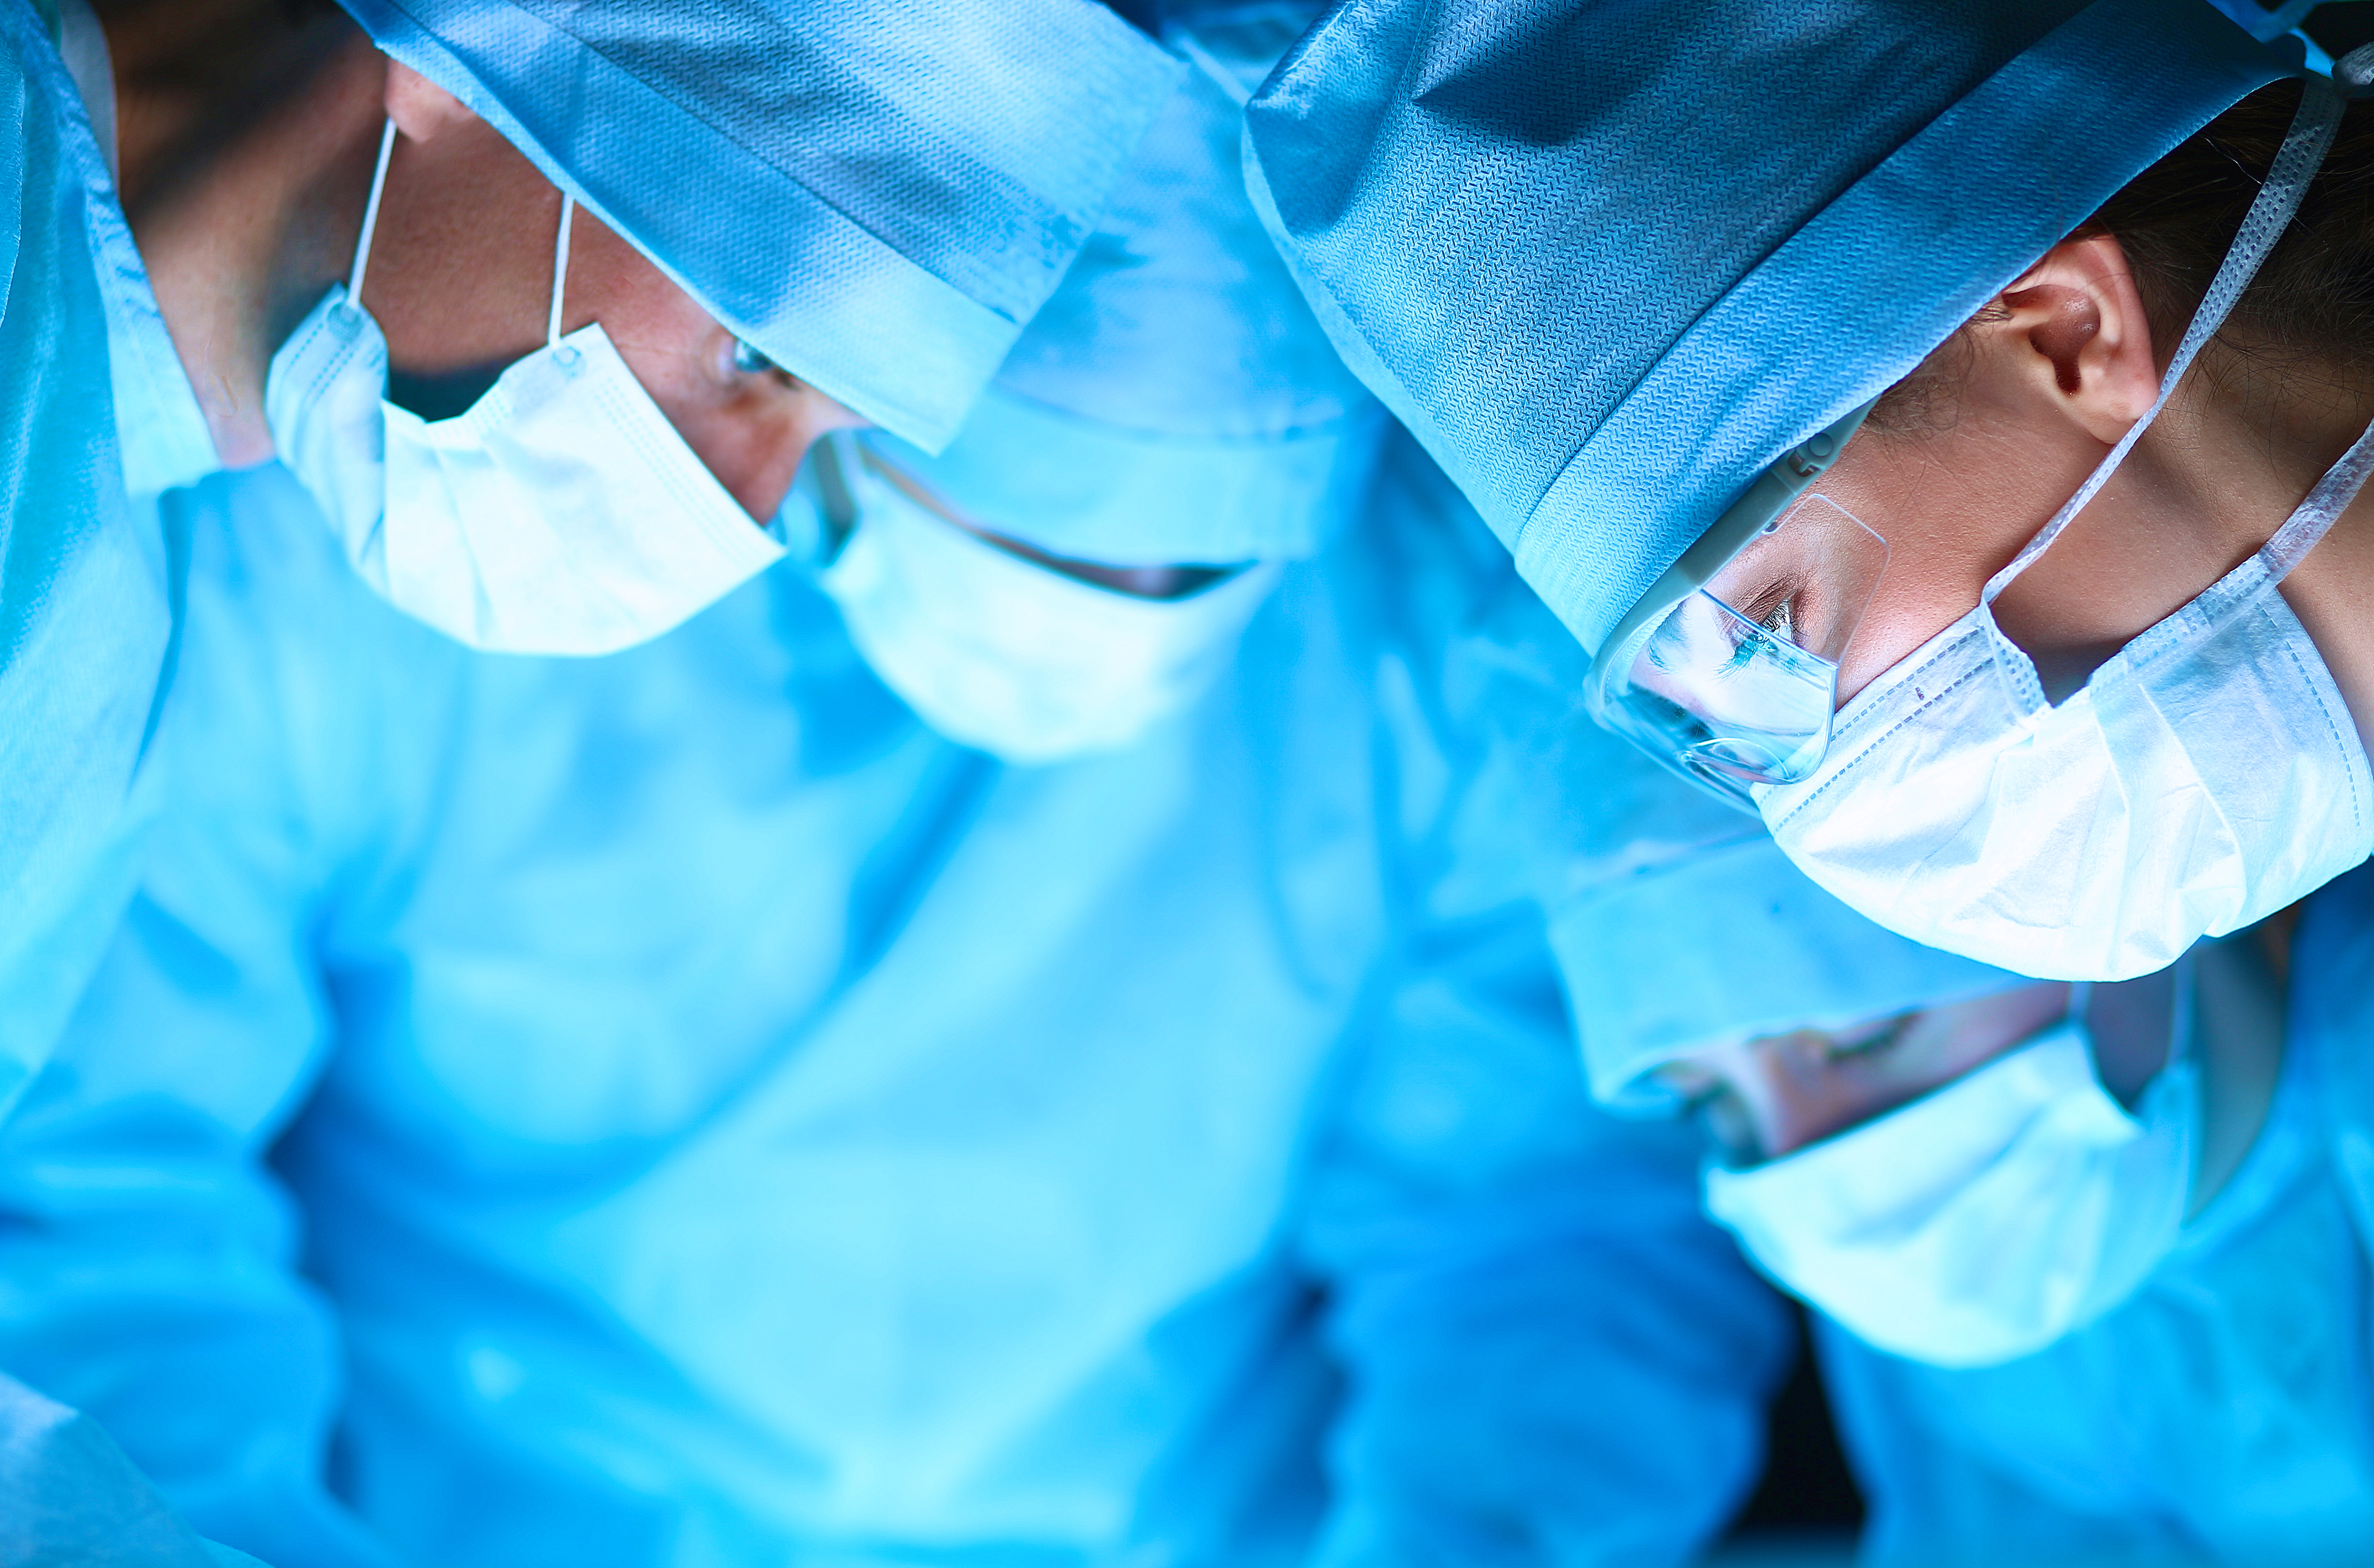 Une équipe de chirurgiens | Source : Shutterstock